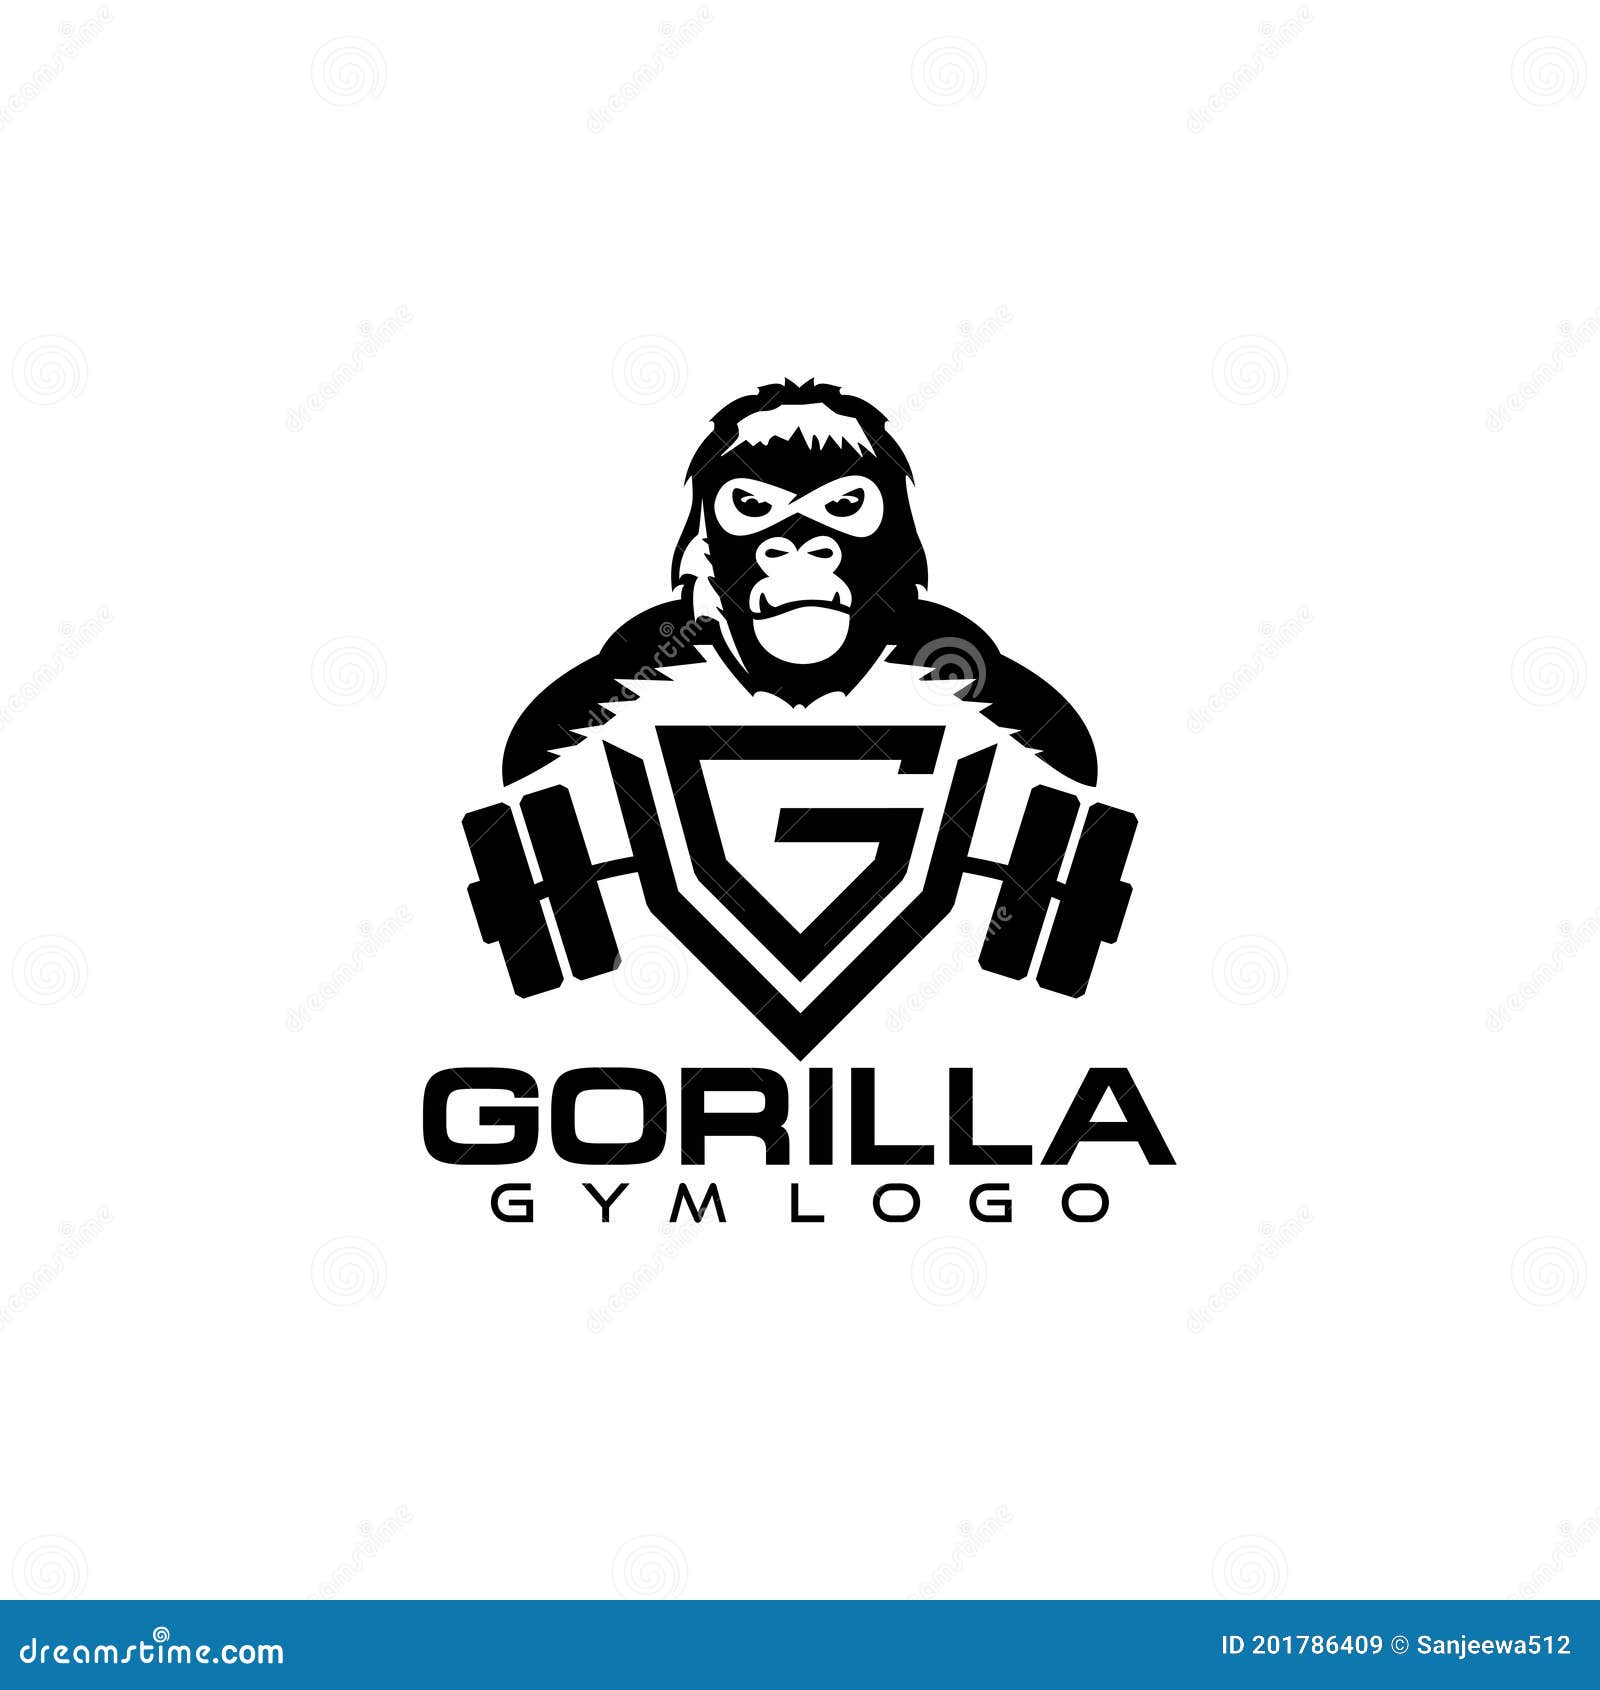 Gorilla gym symbol logo fitness Royalty Free Vector Image